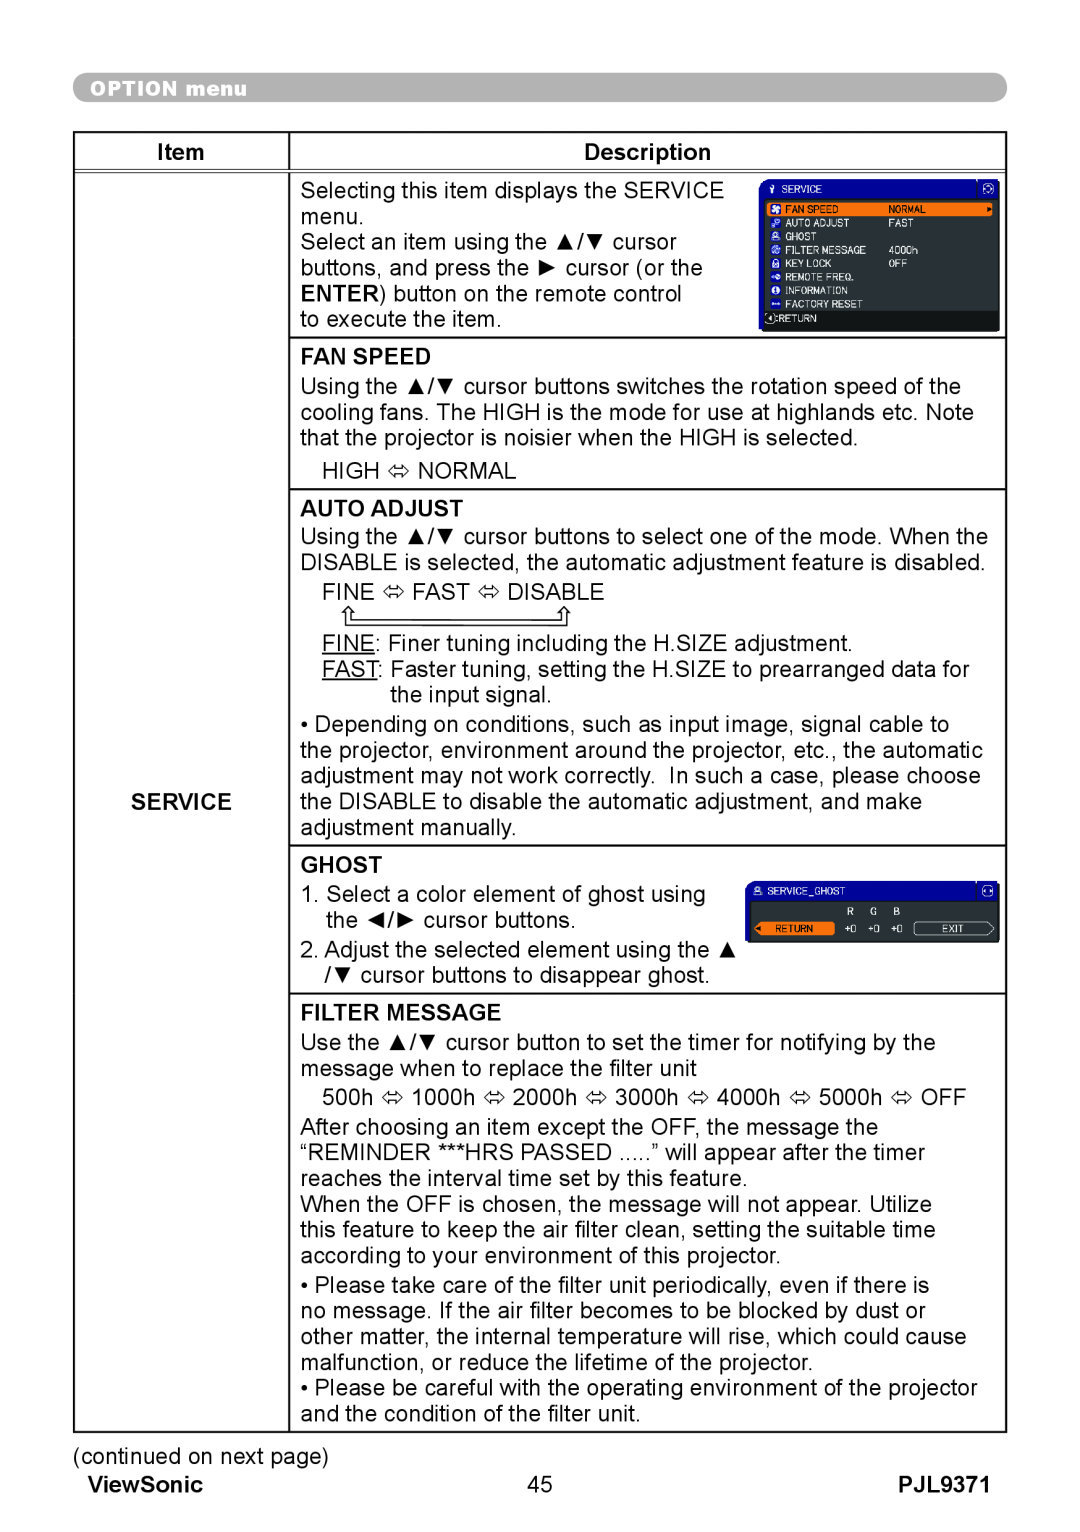 ViewSonic pjl9371 manual Item, Description, Service, Fan Speed, Auto Adjust, Ghost, Filter Message, ViewSonic 